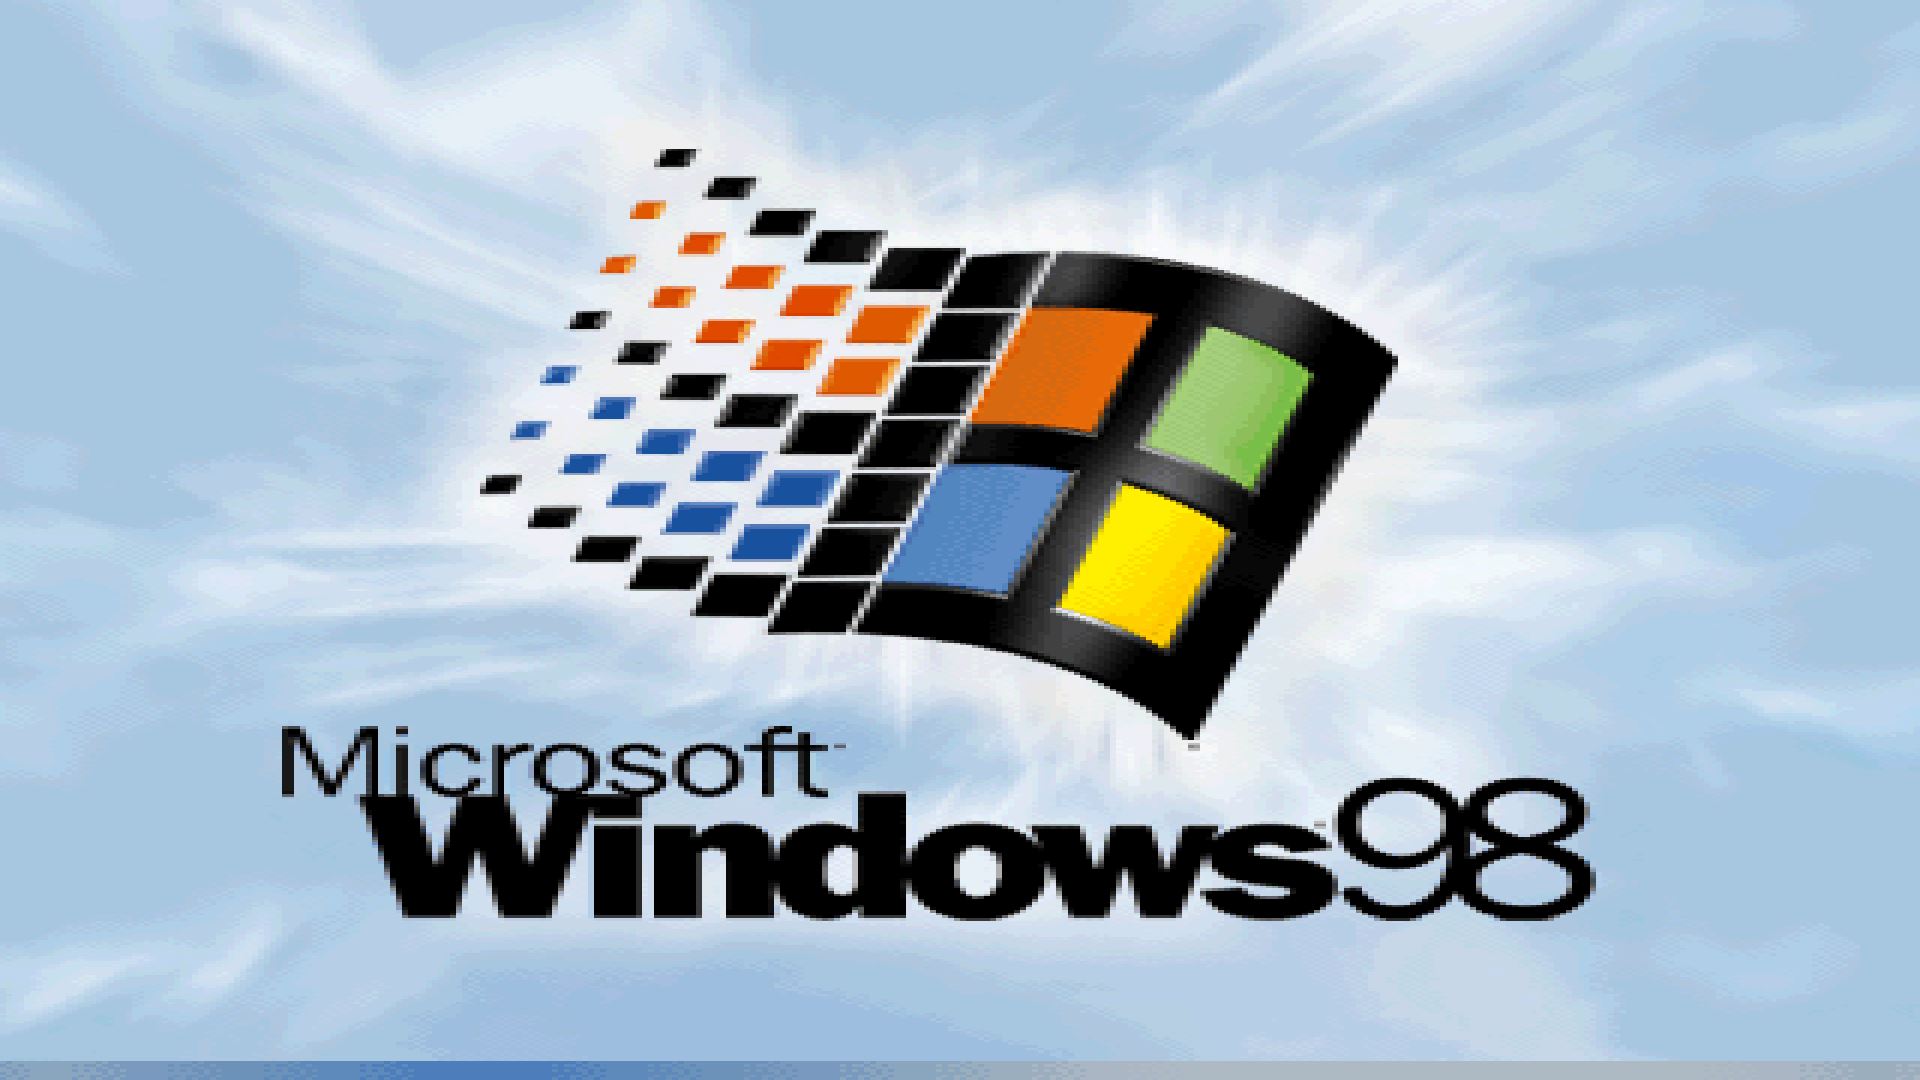 Windows 98 - ekran startowy